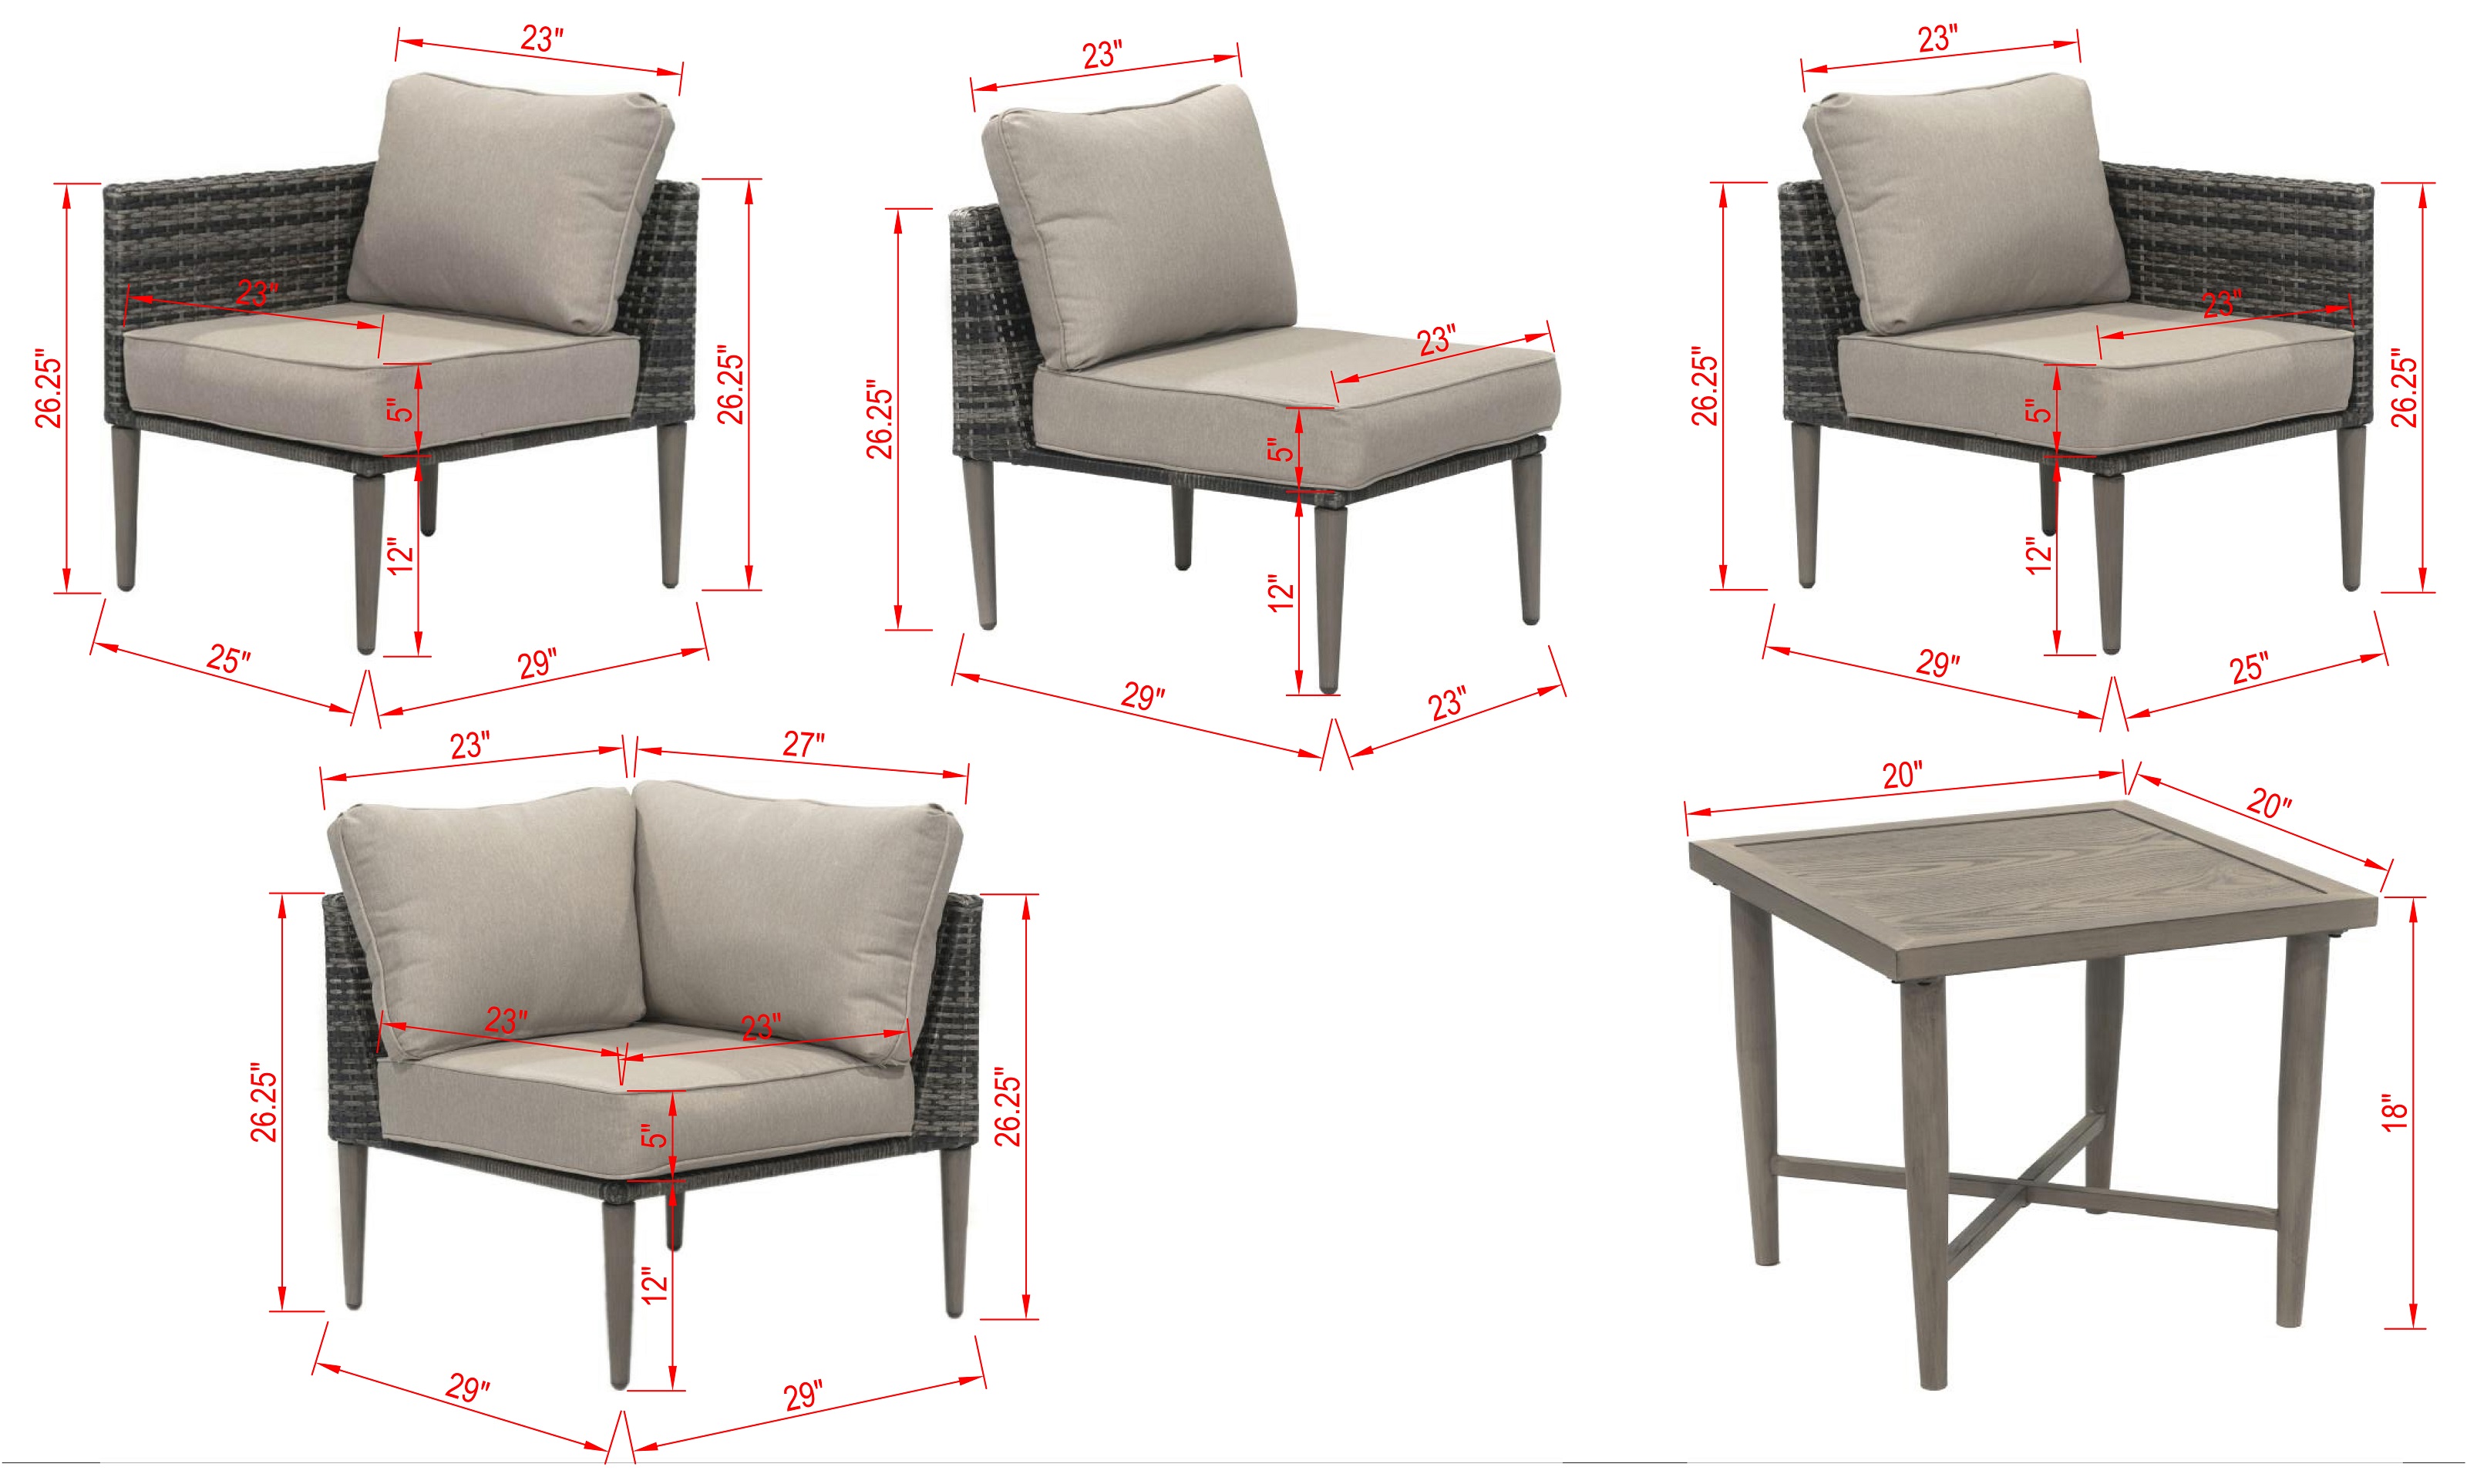 Donglin Outdoor Patio Furniture Sutton Creek 7-Piece Steel Sectional Sofa PE Wicker Rattan Set,Gray - image 9 of 16